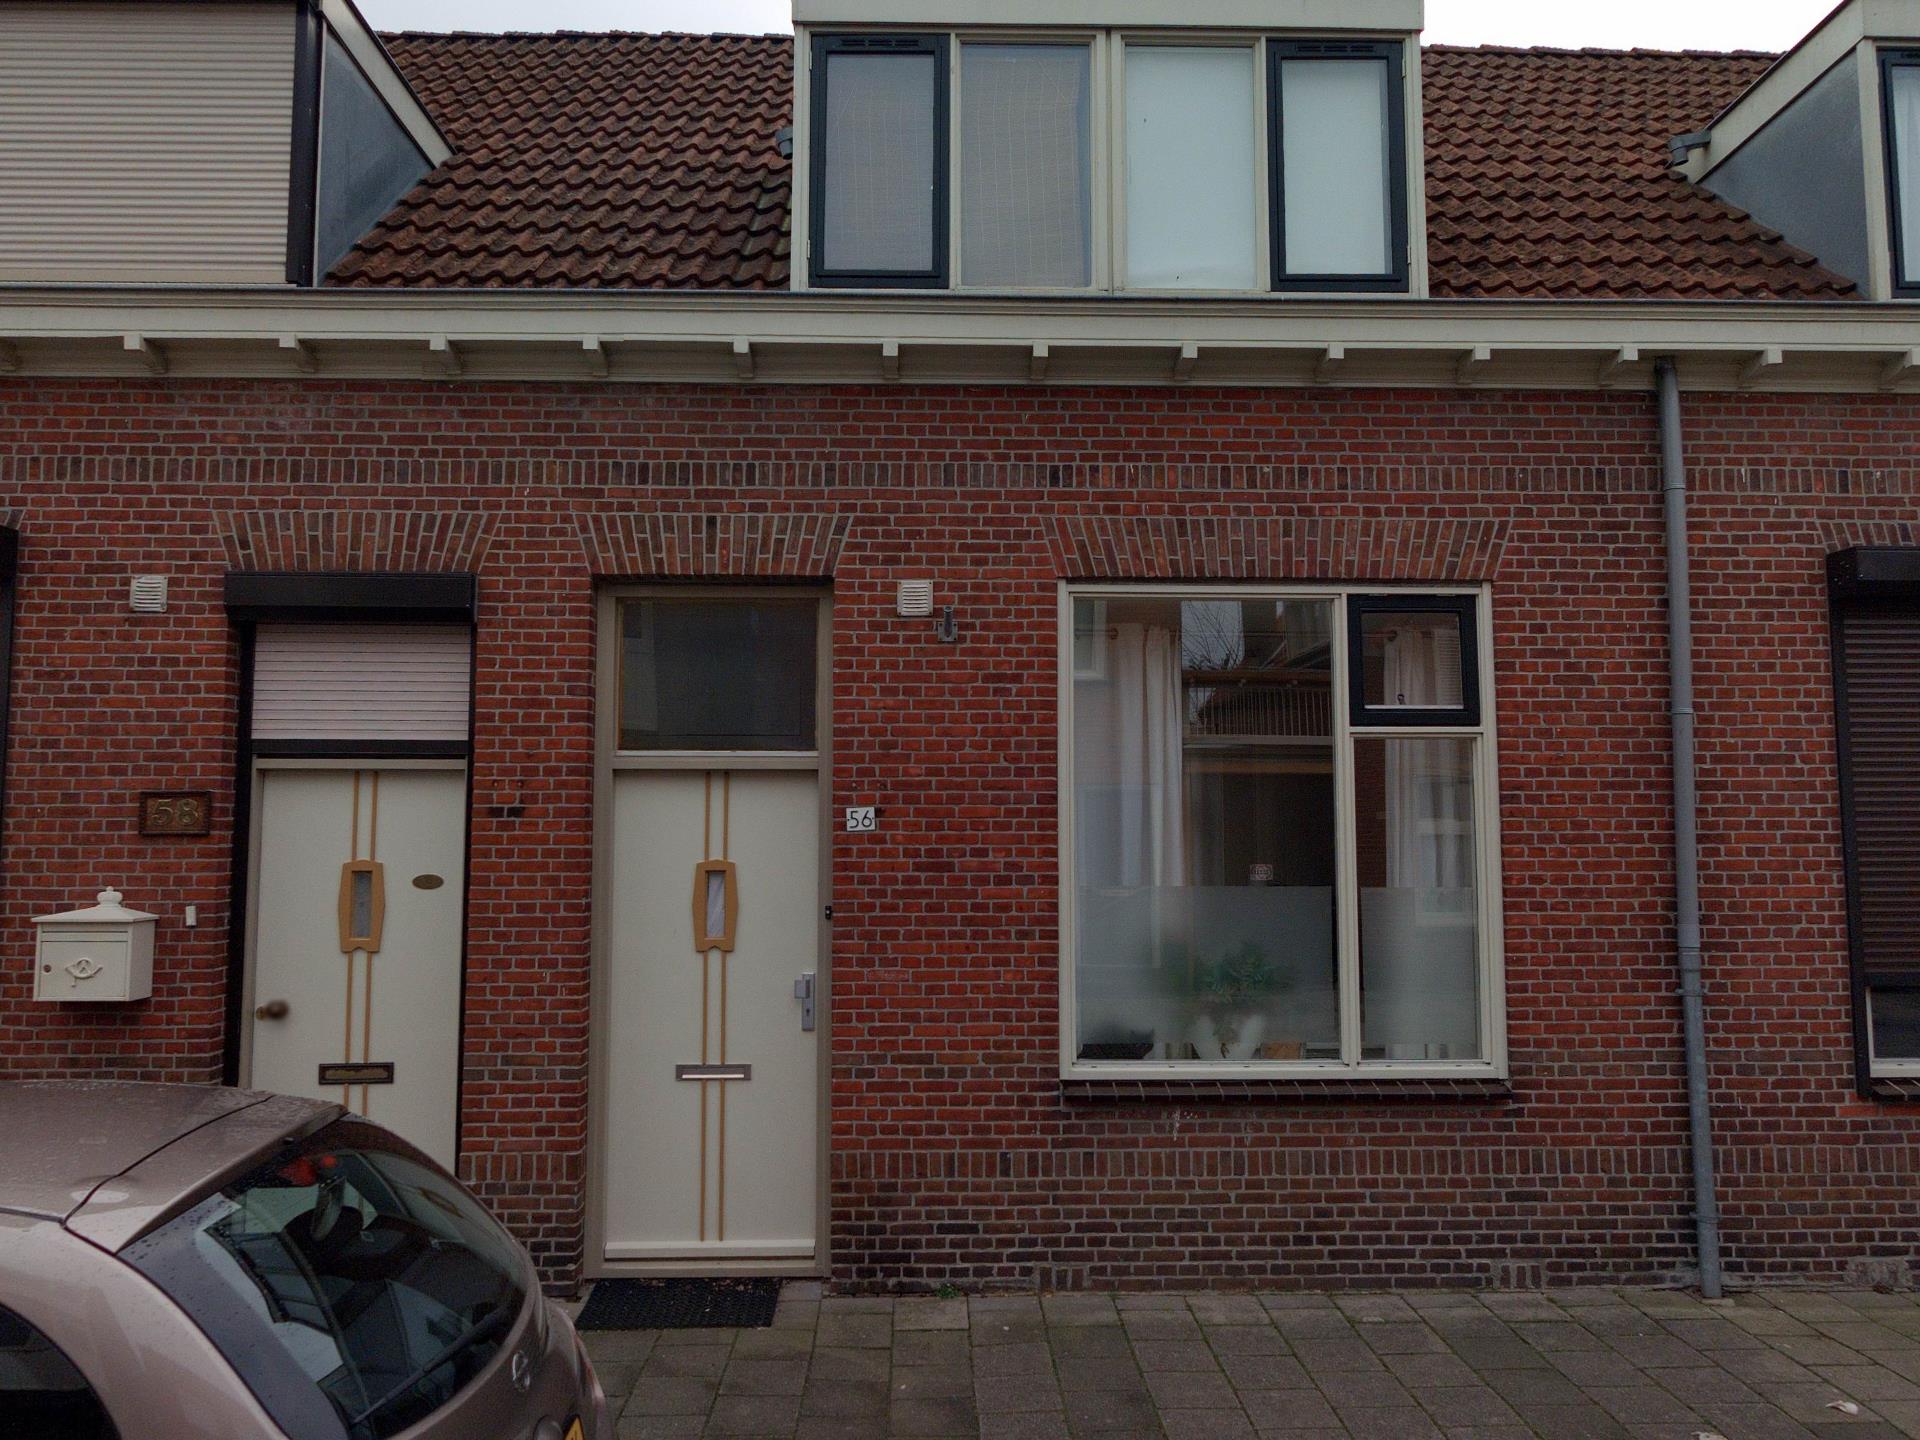 Emmastraat 56, 4701 GG Roosendaal, Nederland